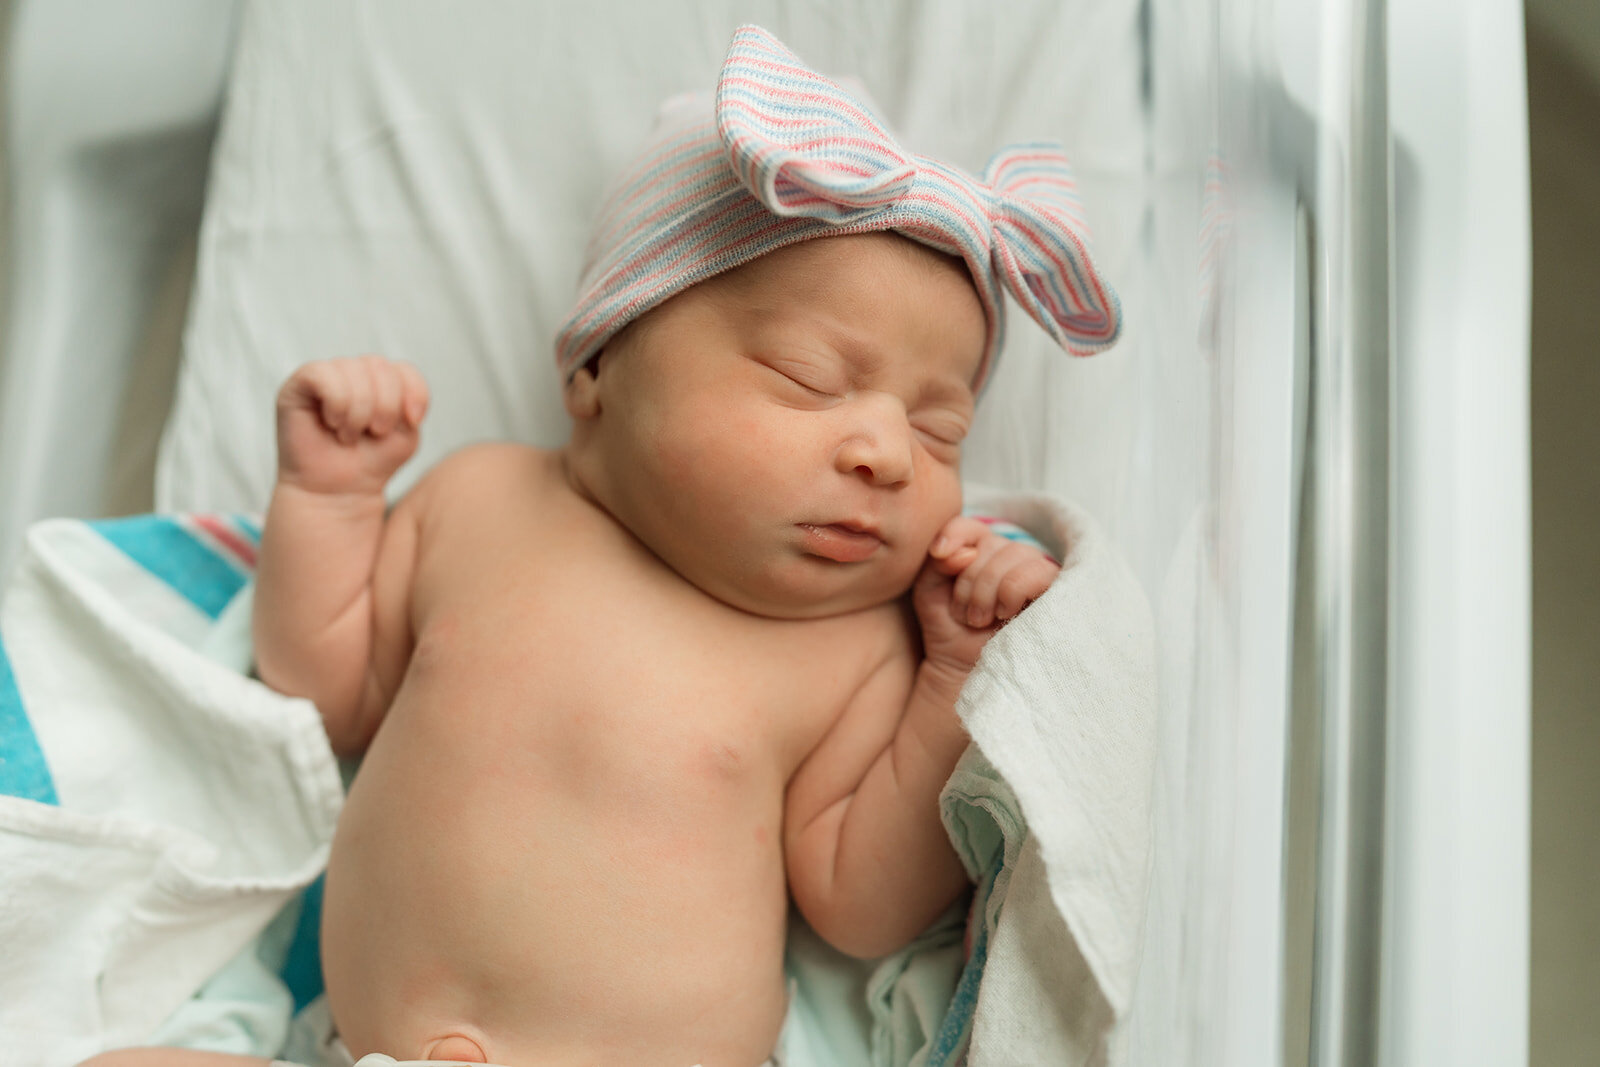 nebworn baby in hospital bed